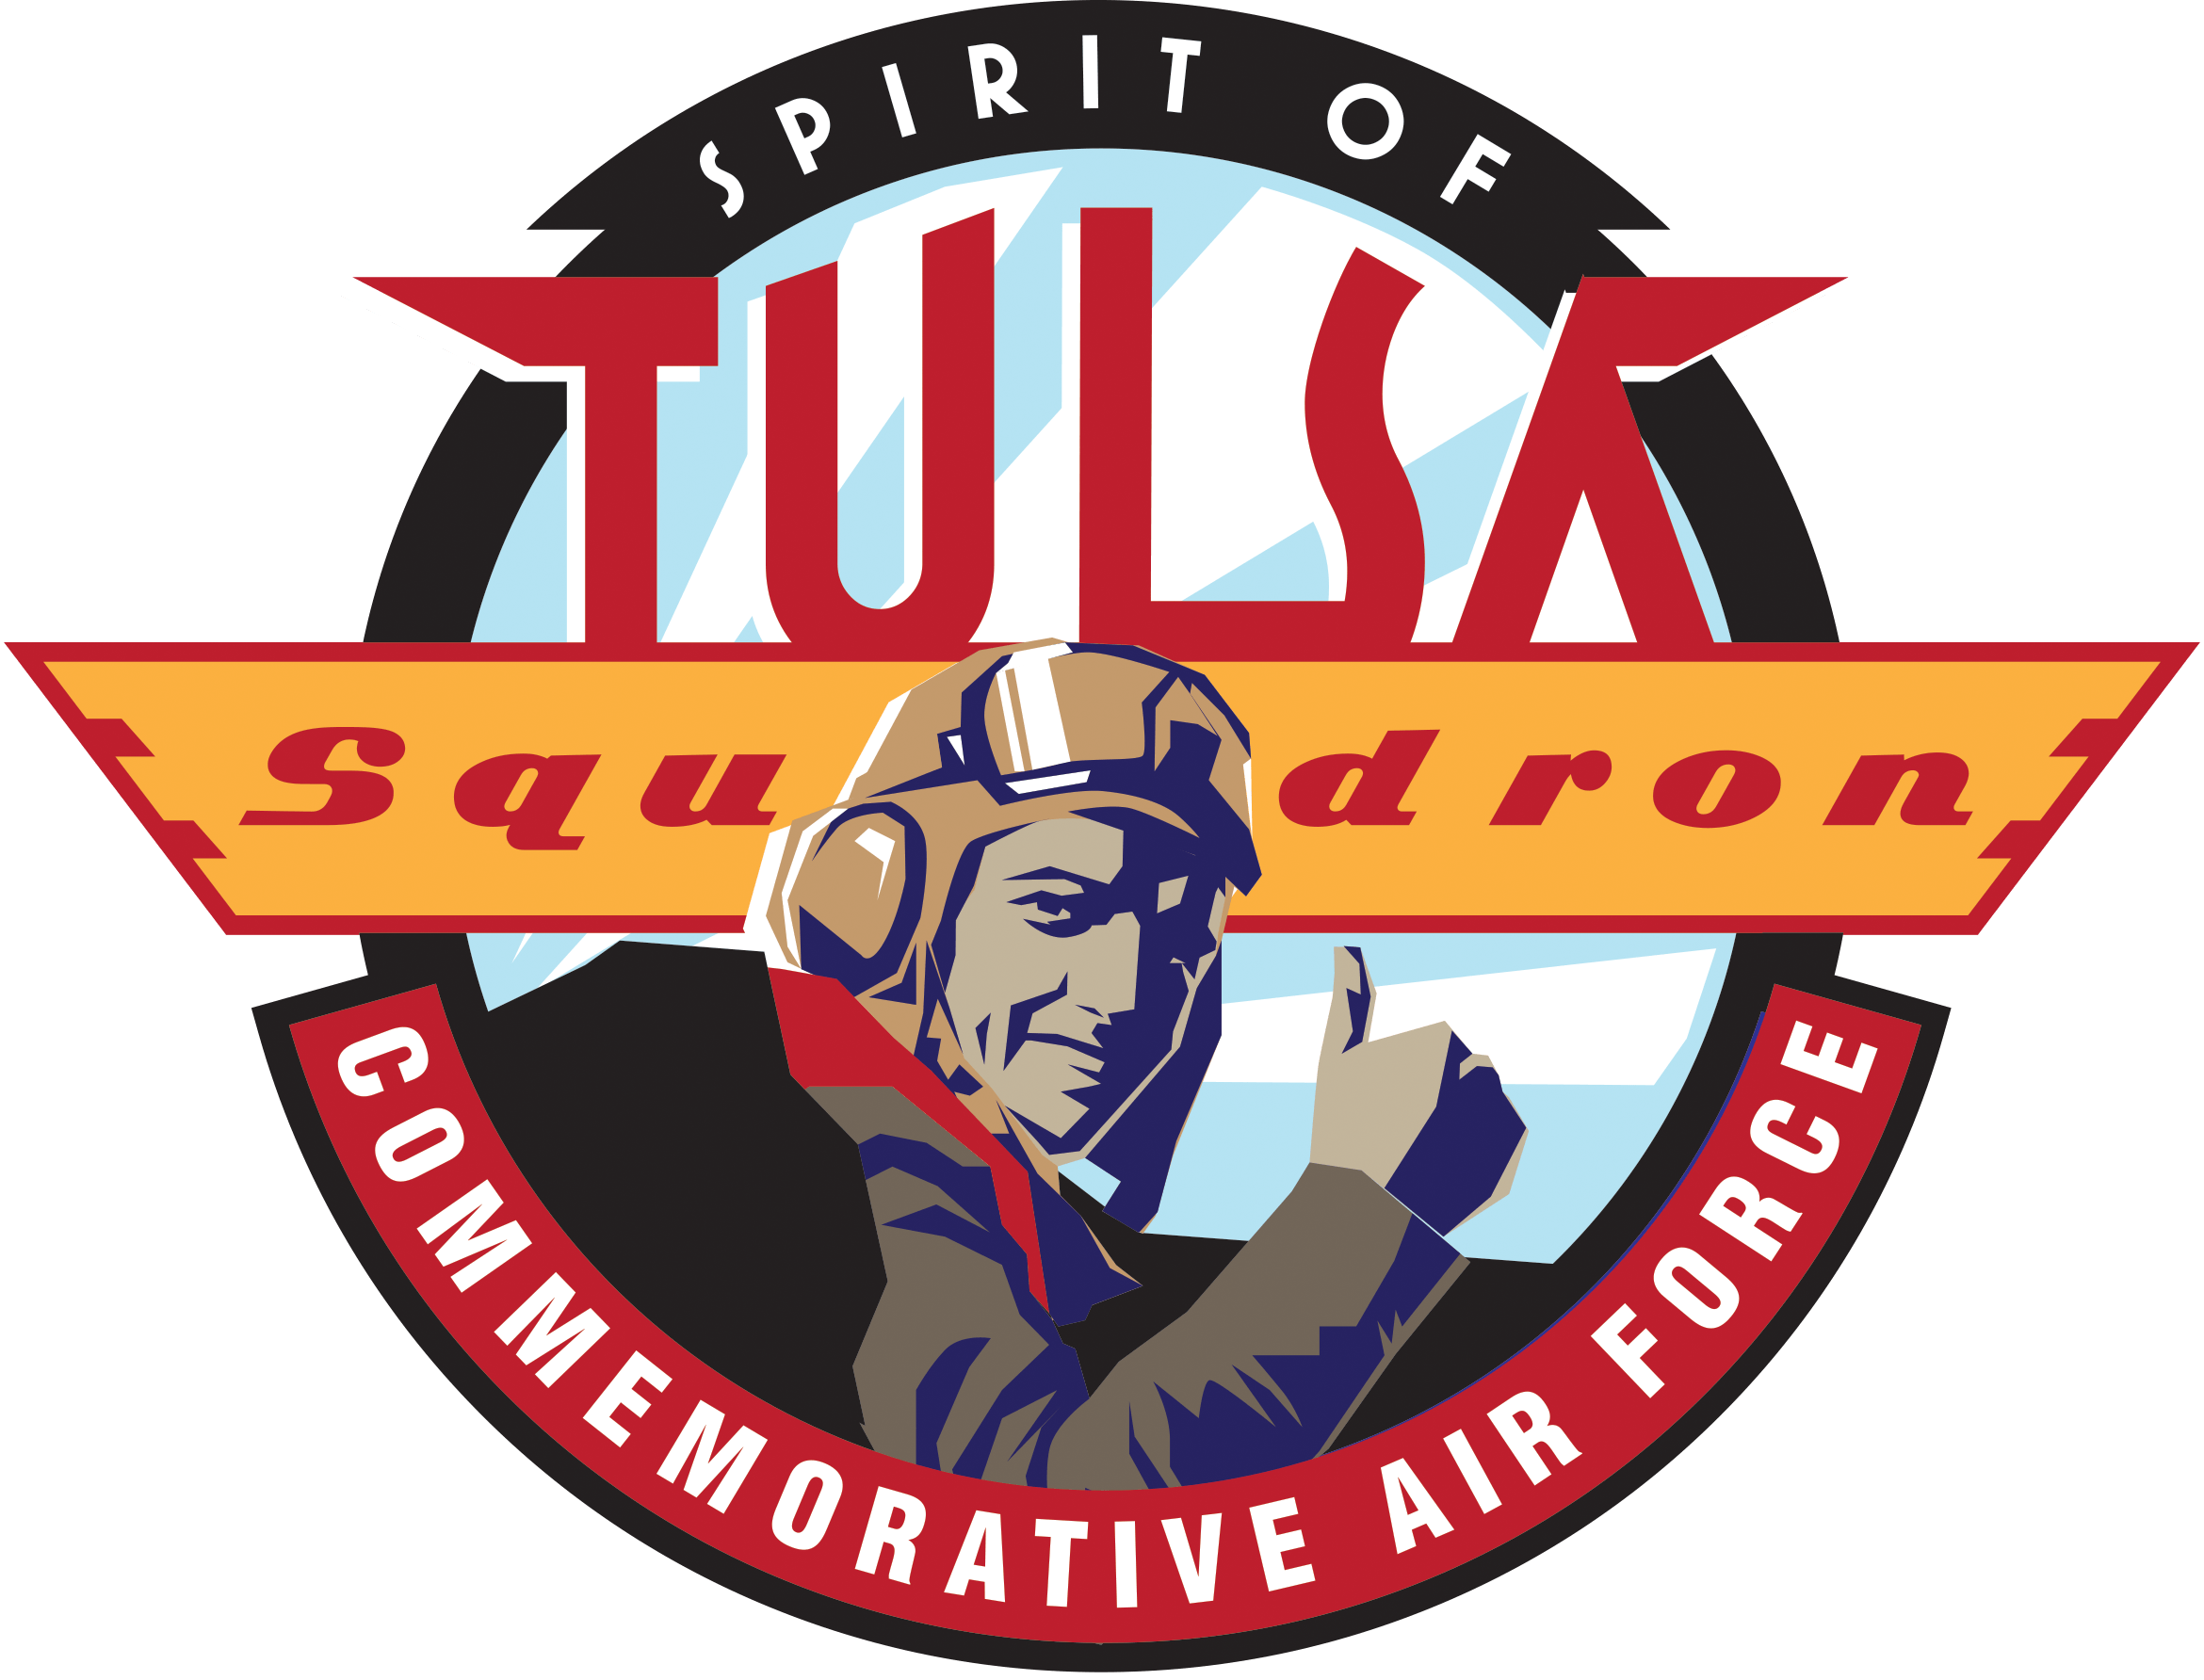 Tulsa Logo - Commemorative Air Force. Spirit of Tulsa Squadron